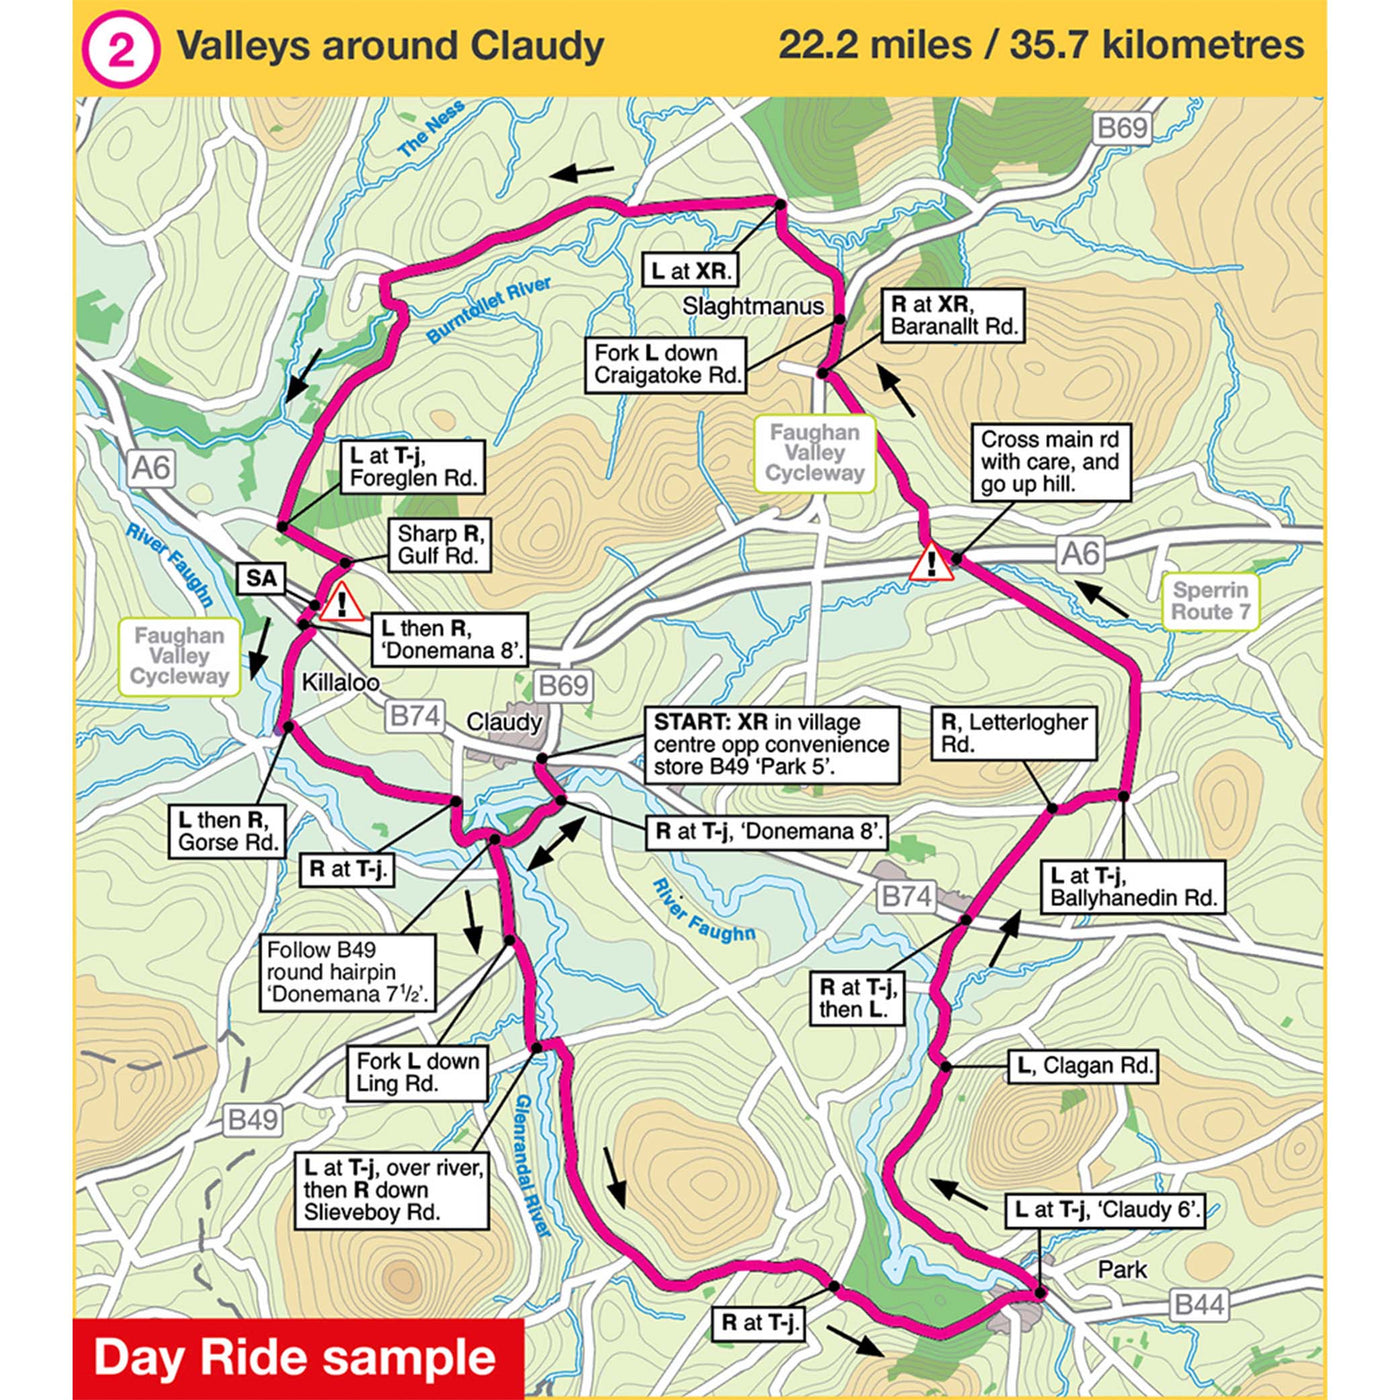 Day ride sample: Valleys around Claudy, 22.2 miles